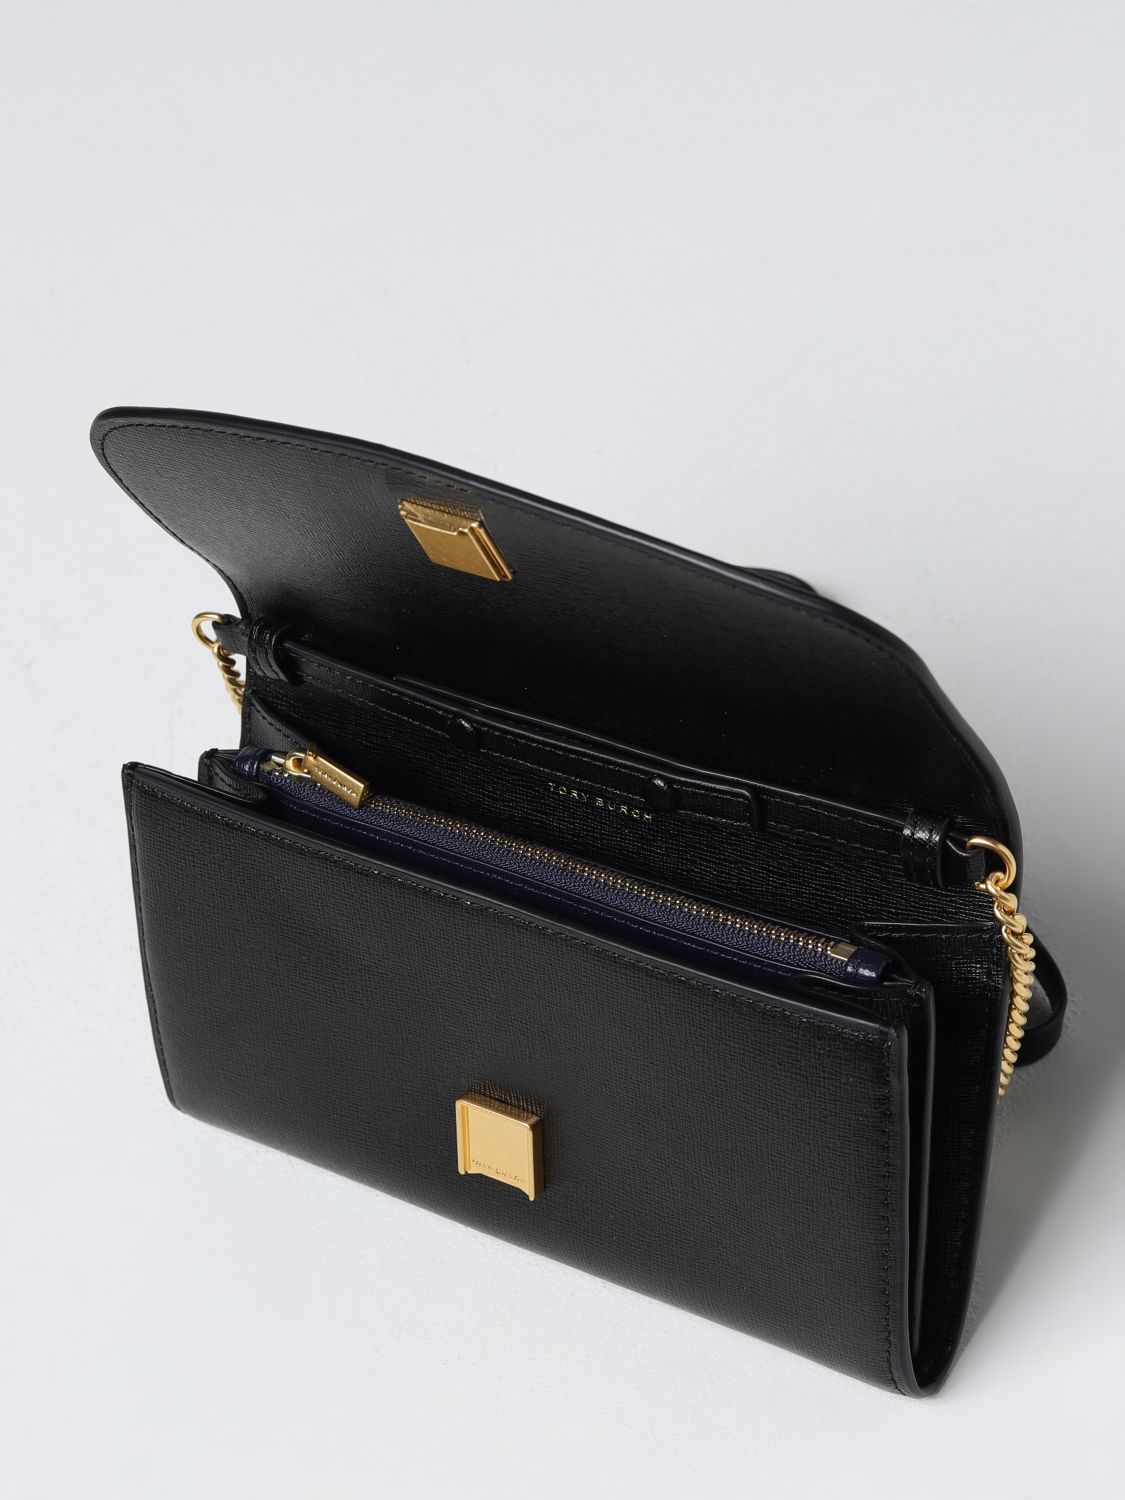 Shop Tory Burch ROBINSON Saffiano Plain Leather Folding Wallet